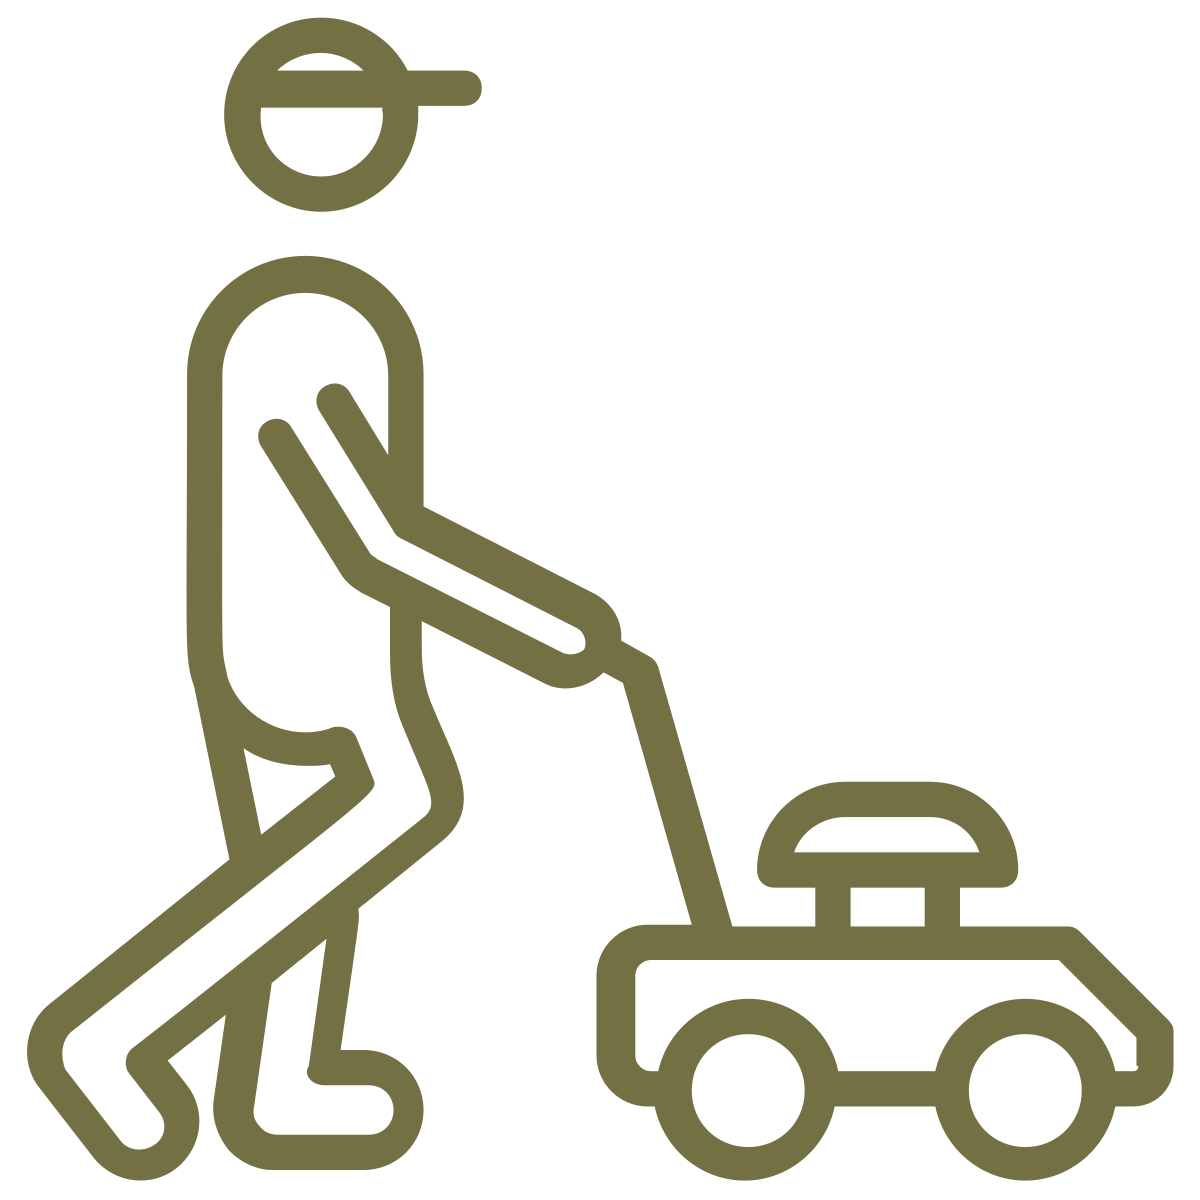 lawn mower icon